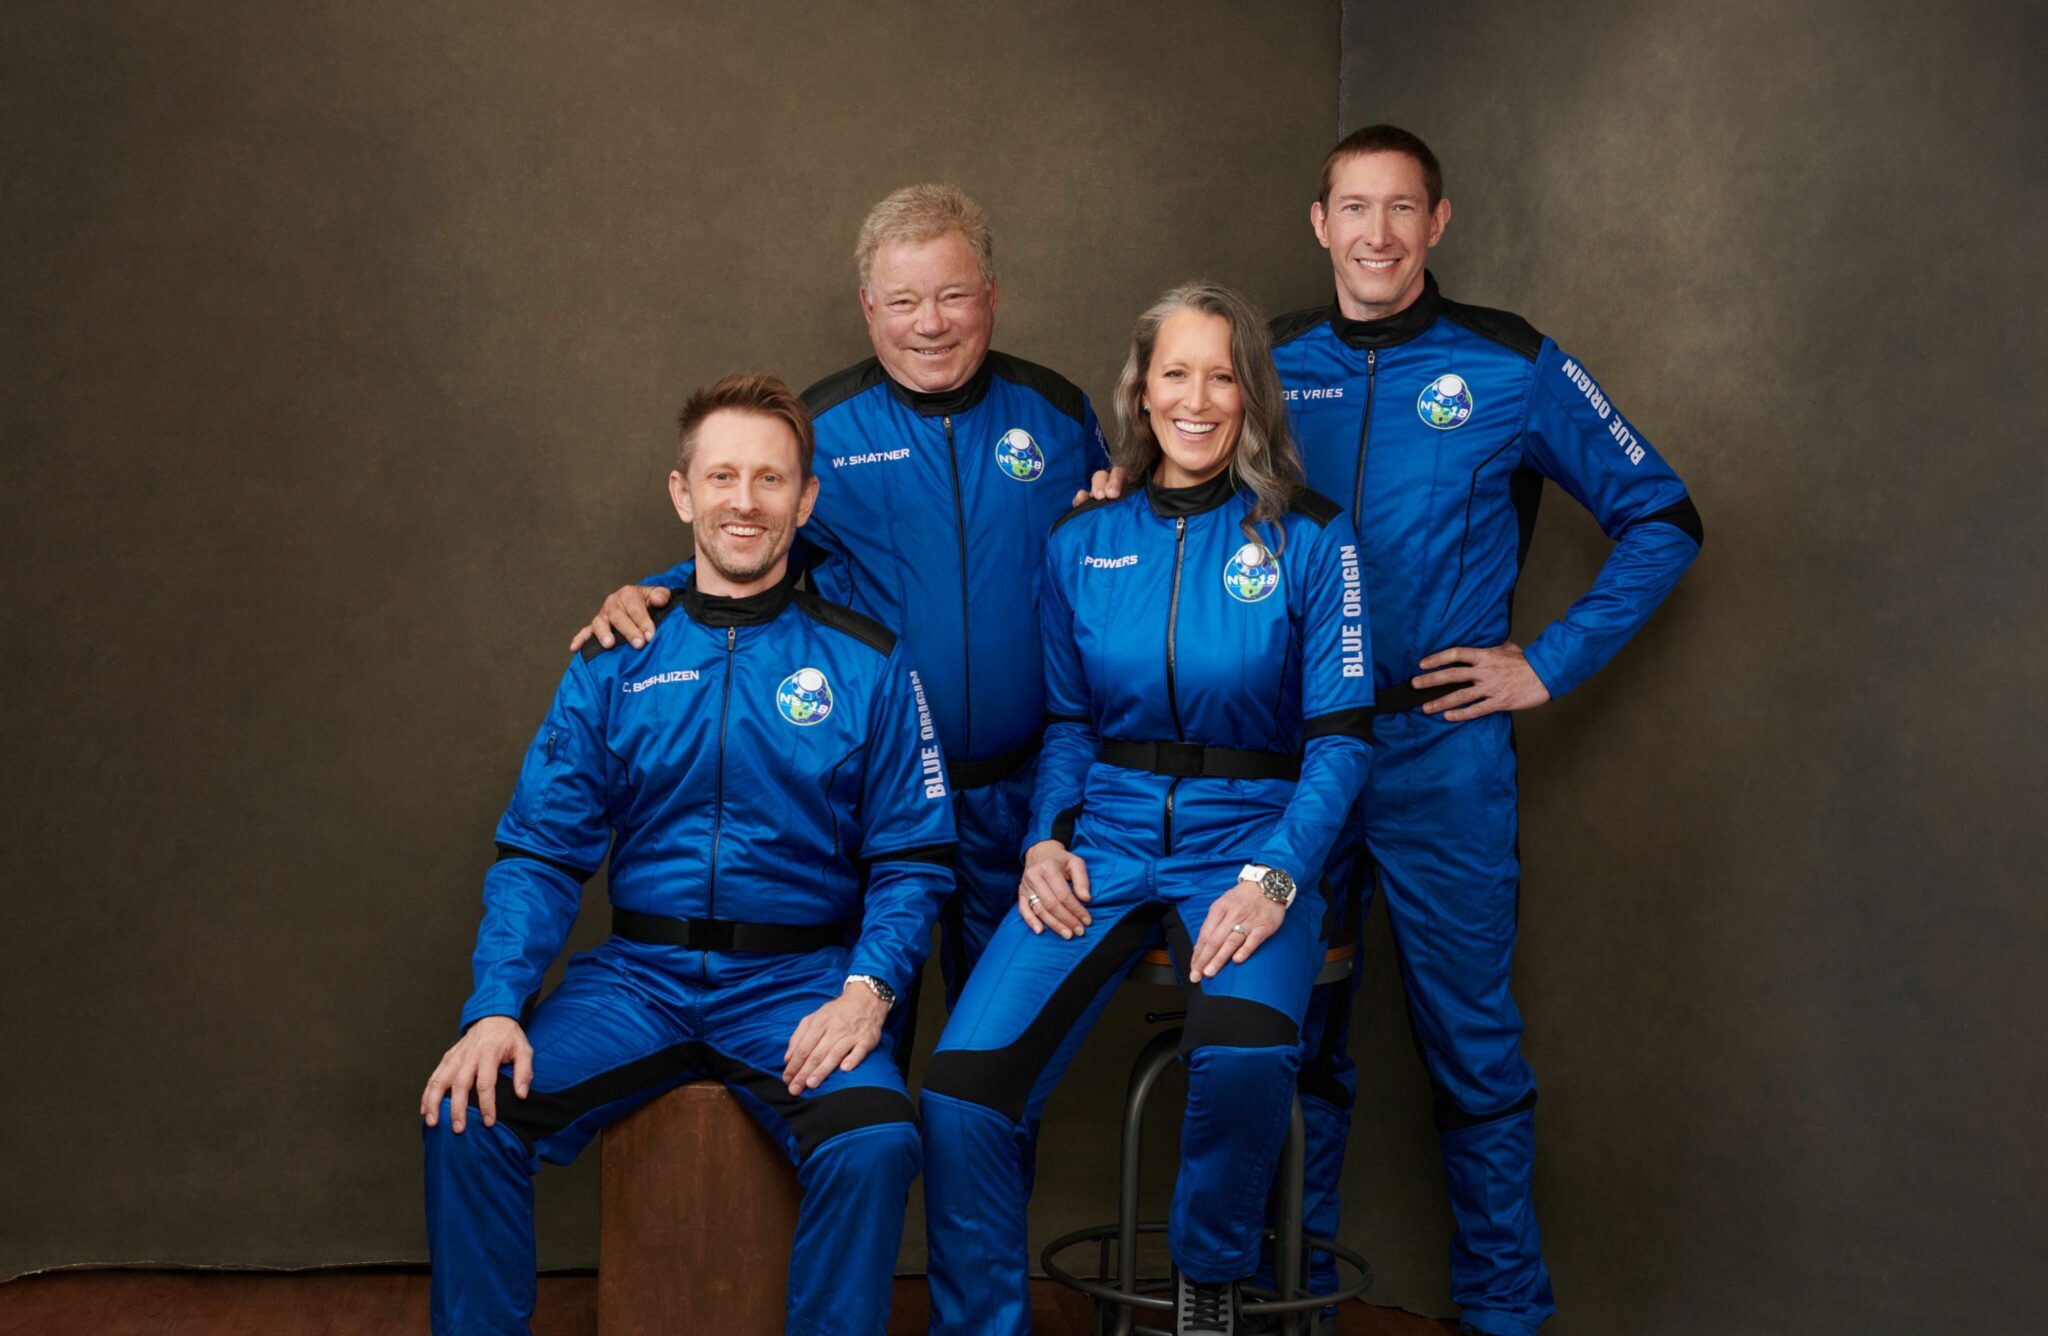 The crew of NS-18, from left: Audrey Powers, William Shatner, Dr. Chris Boshuizen, and Glen de Vries.